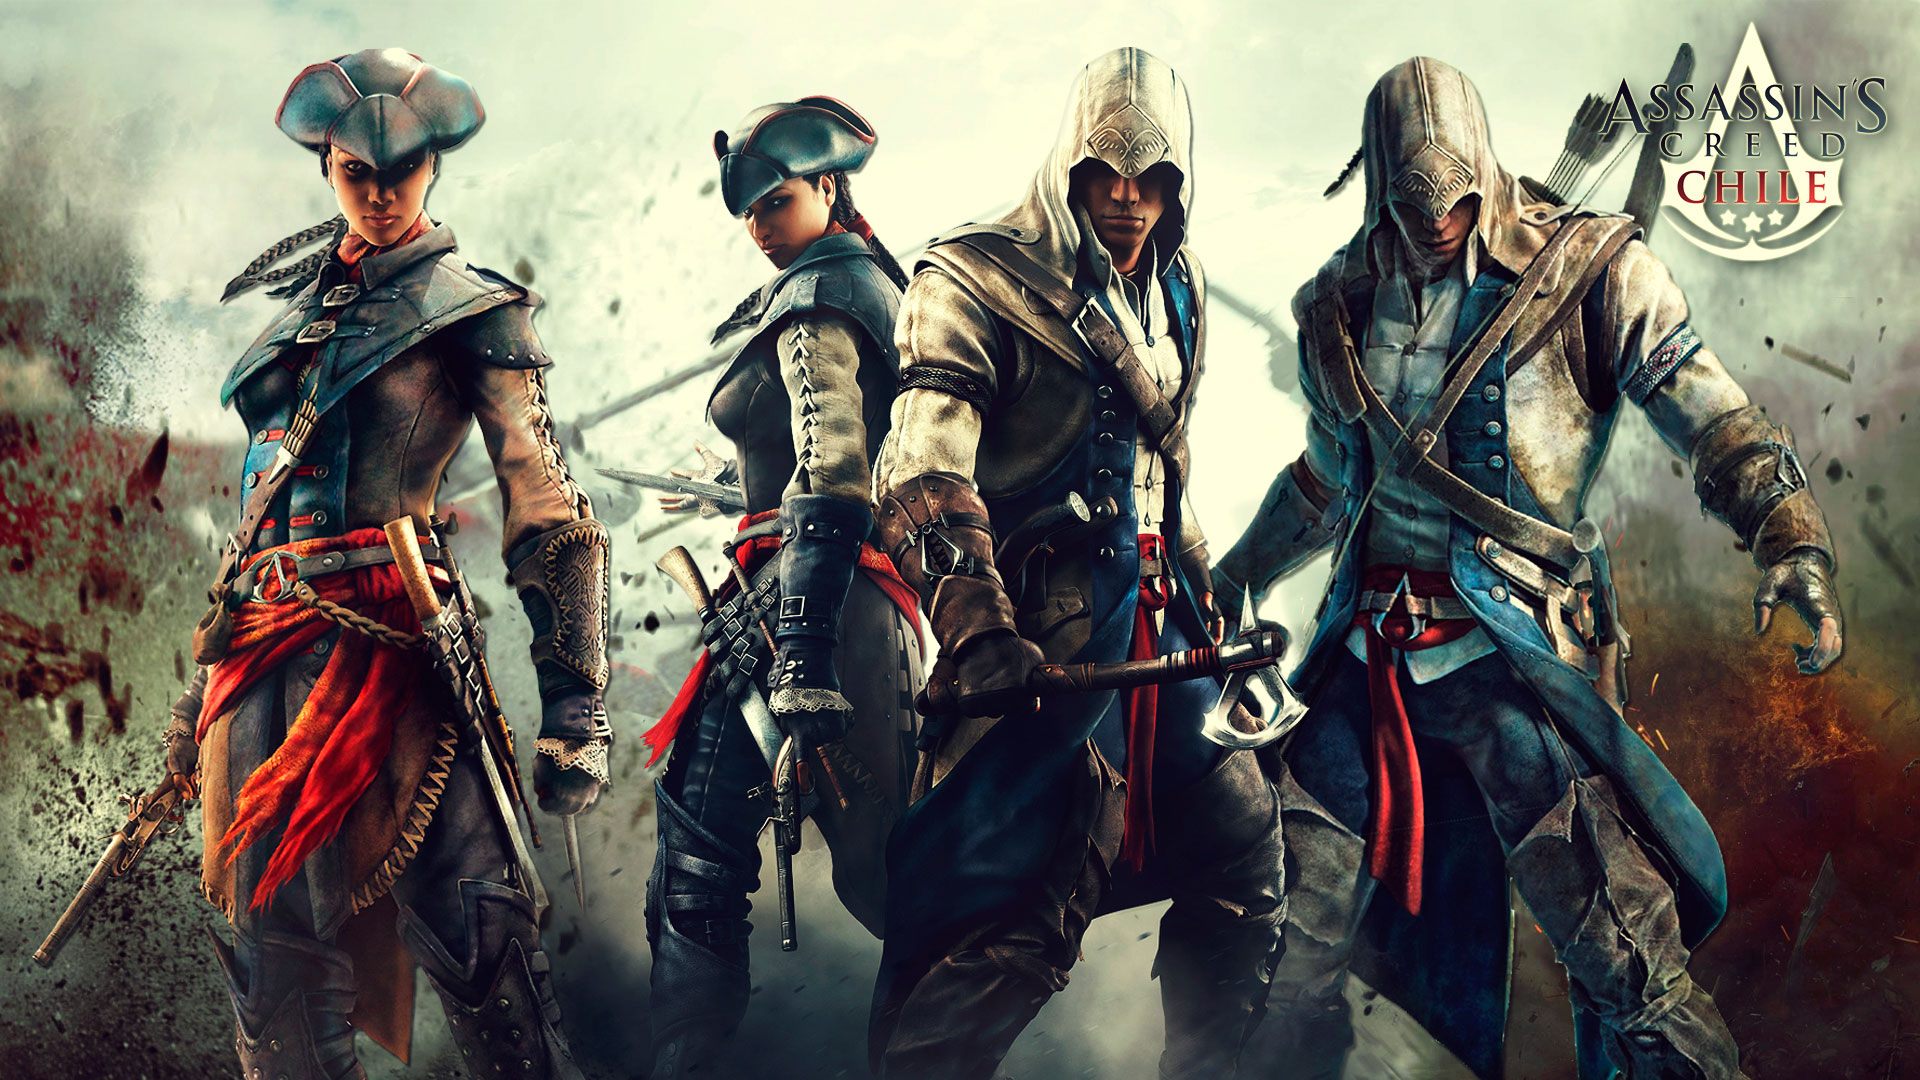 Assassin's Creed 3 - The Assassin's Wallpaper (31806225) - Fanpop